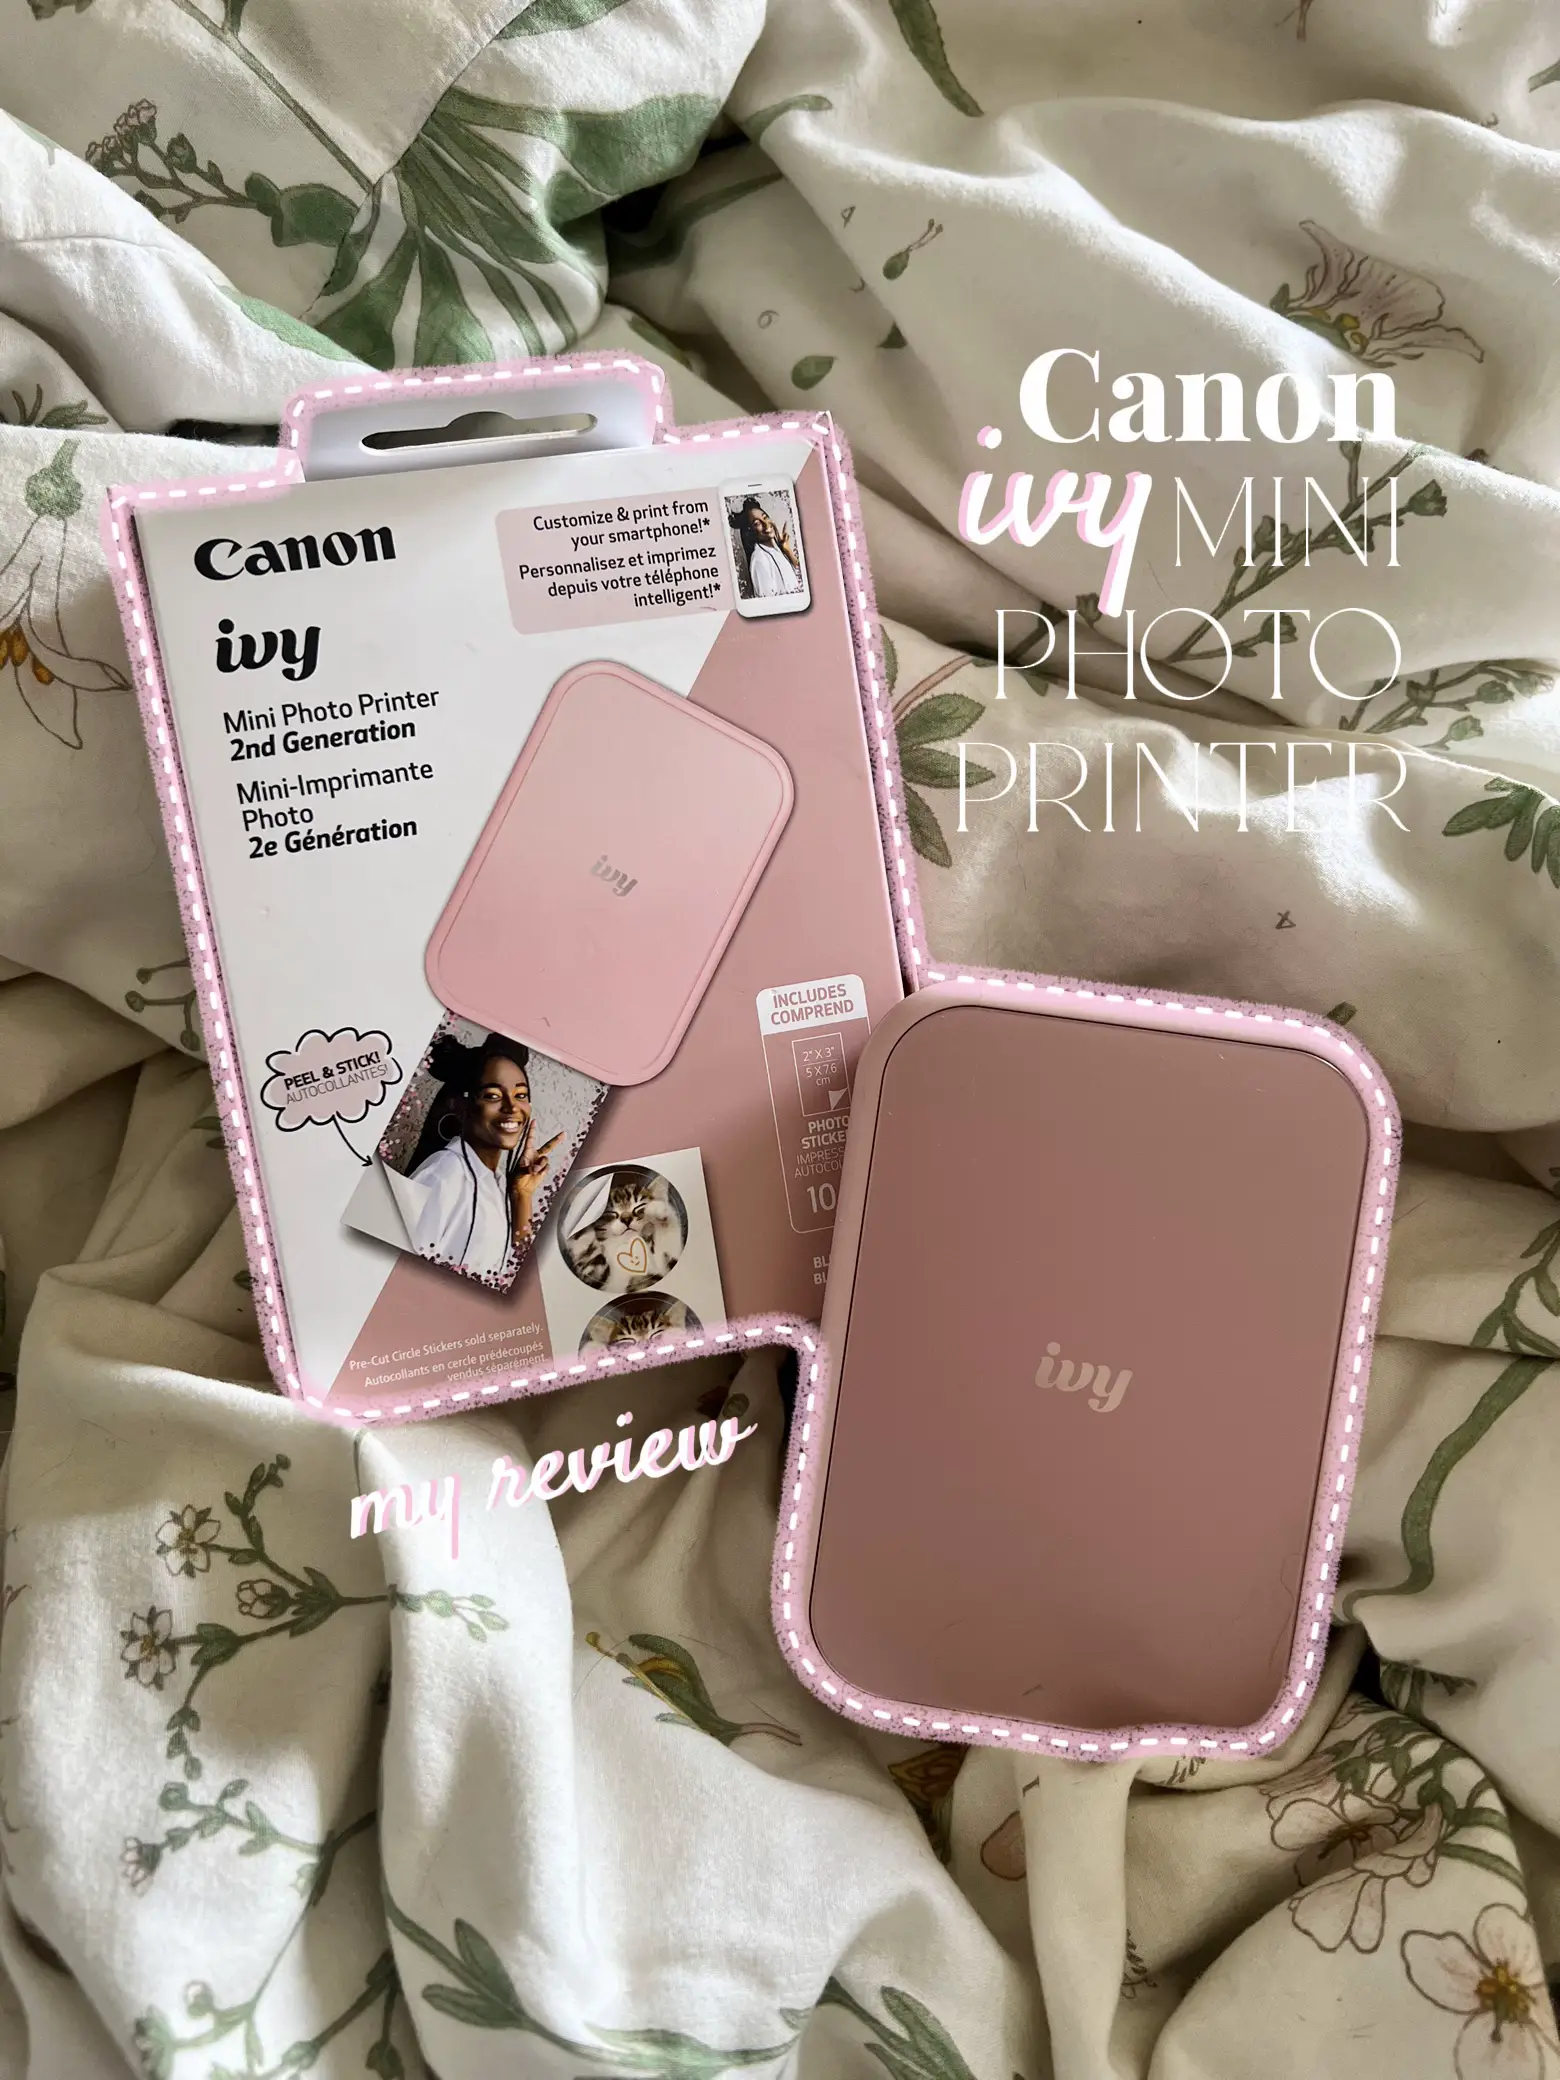 Canon Ivy 2 Mini Photo Printer review